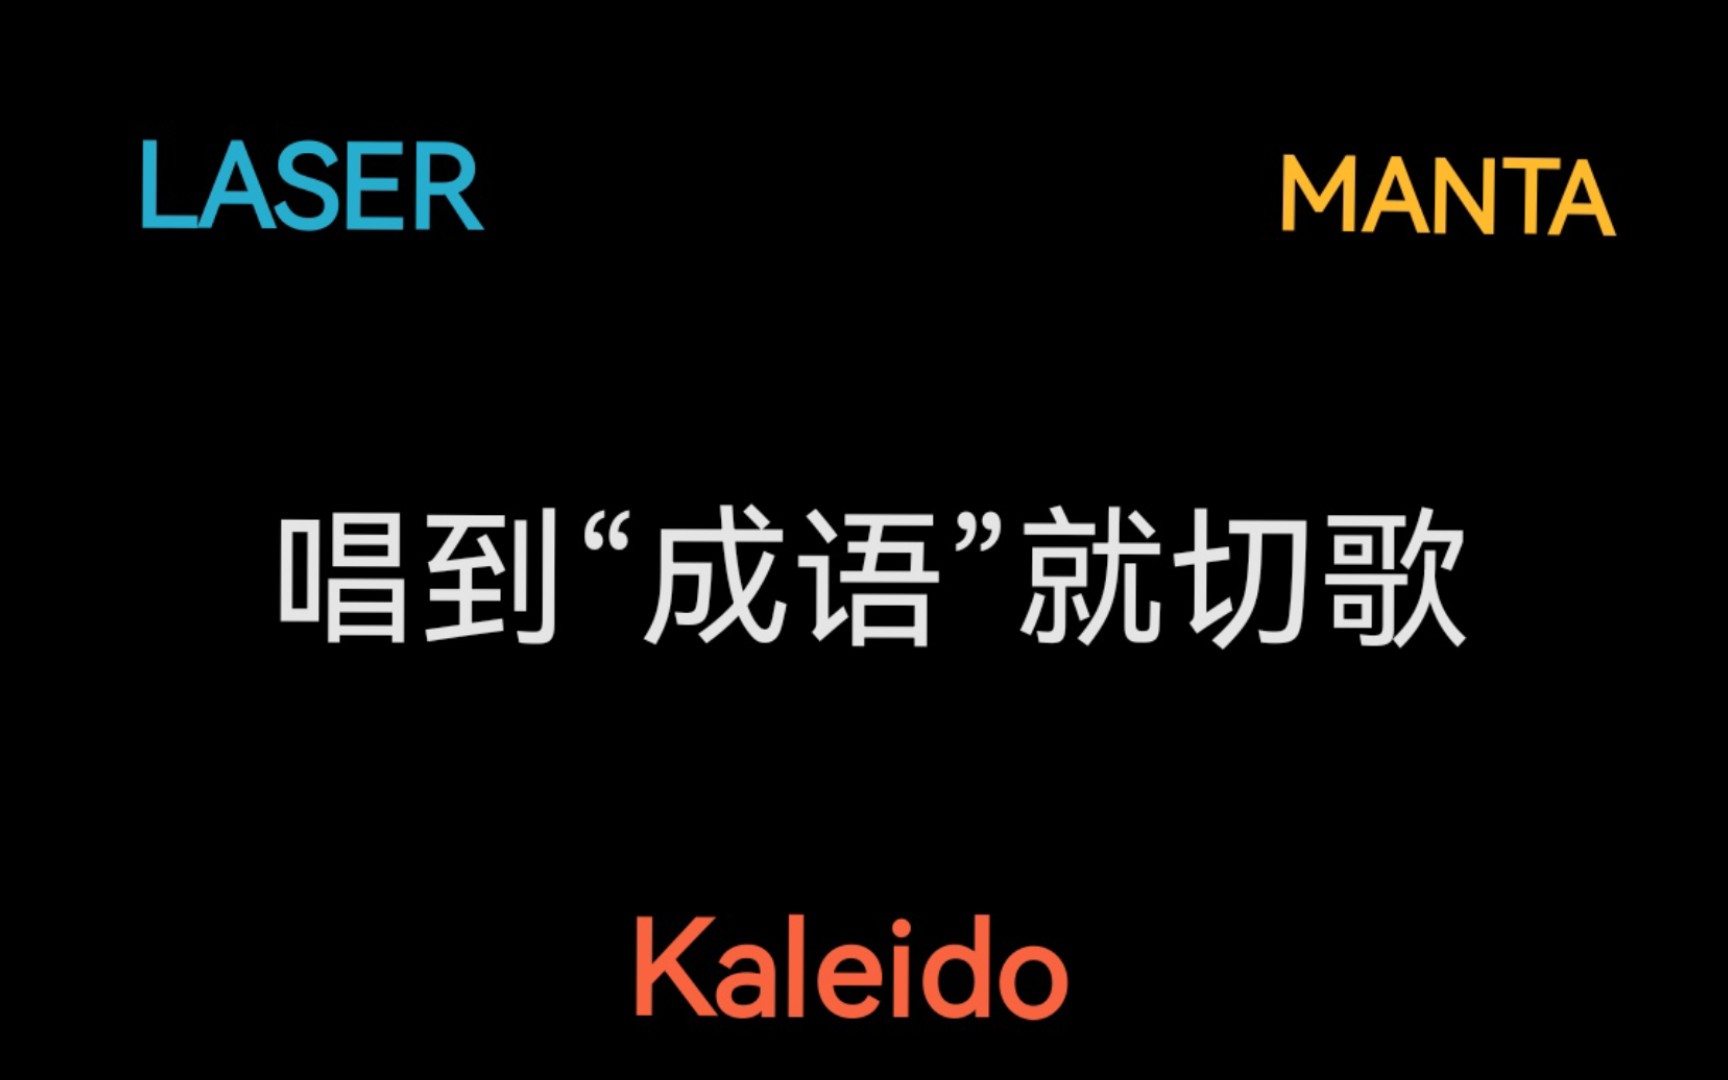 【LASER/MANTA/Kaleido】唱到成语就切歌挑战